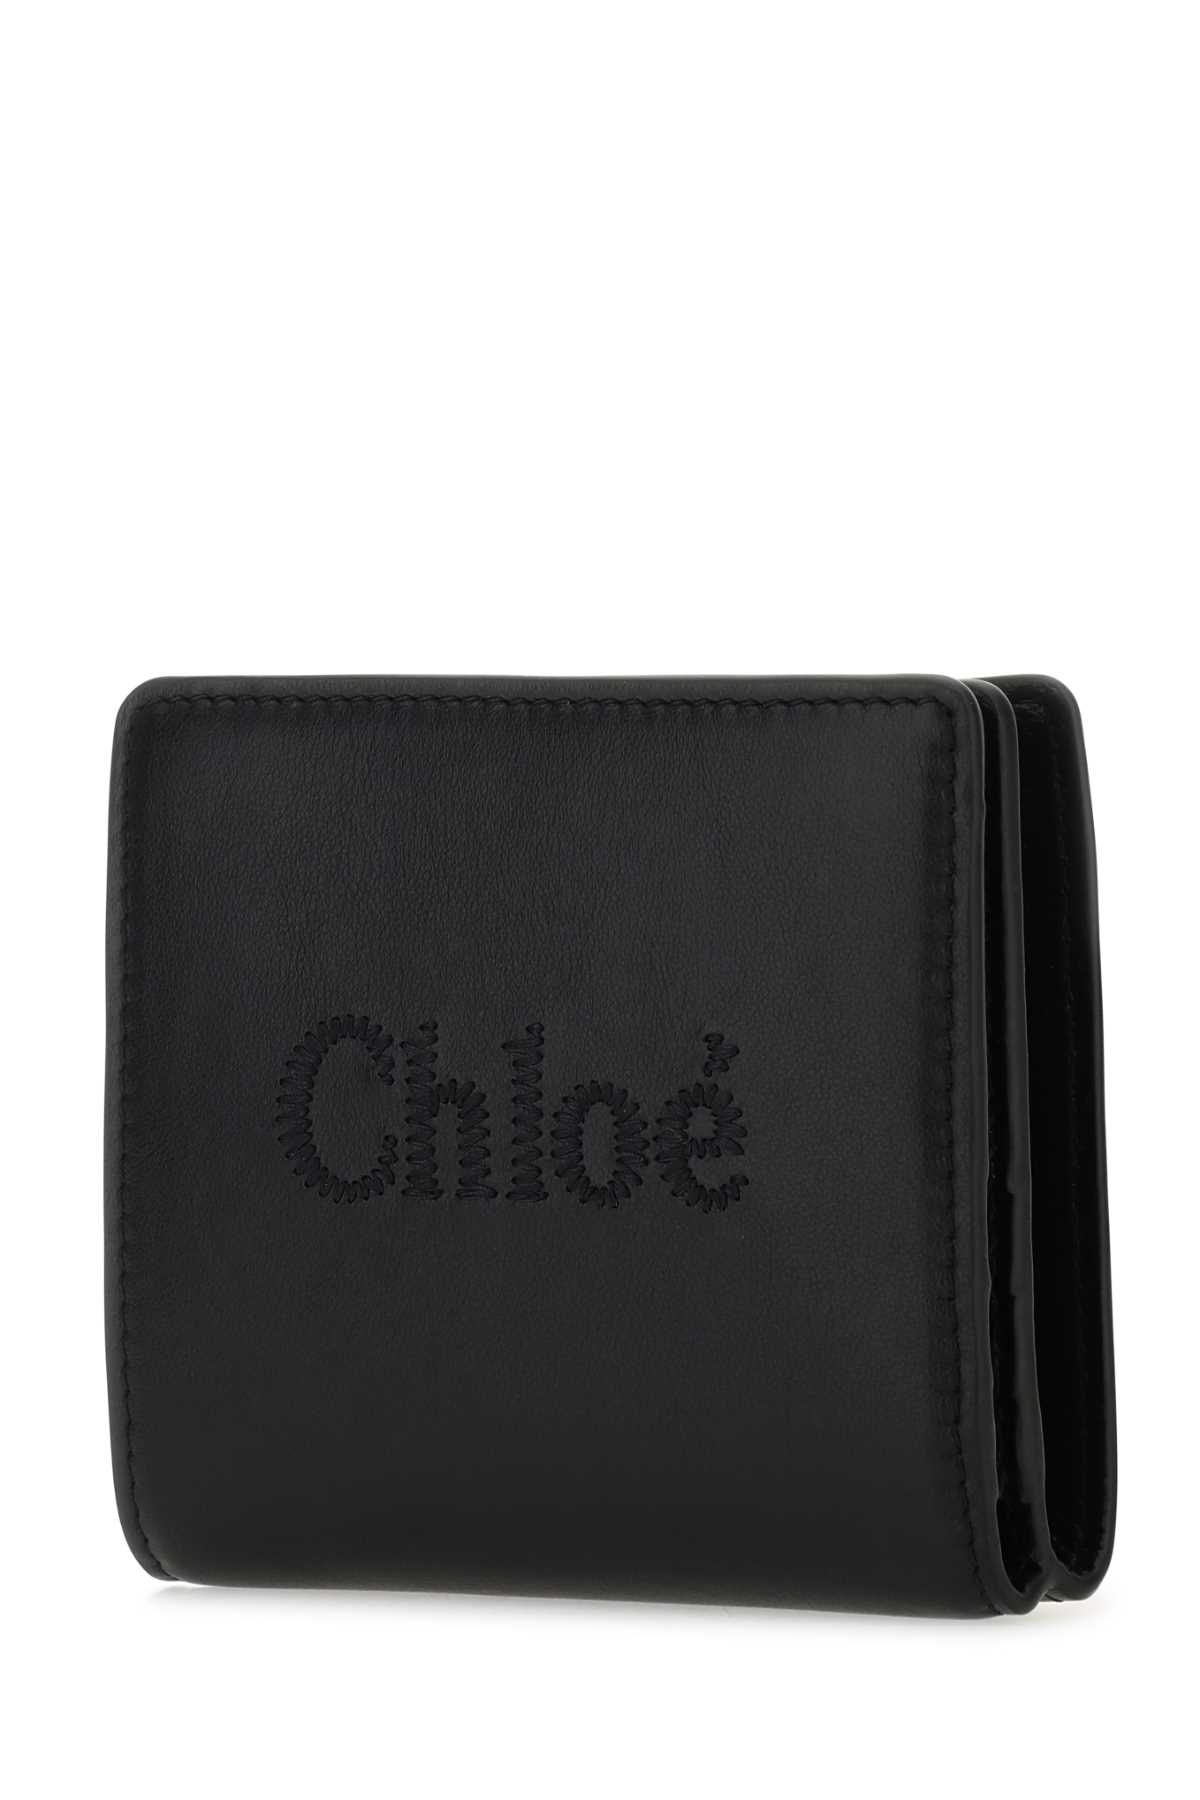 Shop Chloé Black Leather Sense Wallet